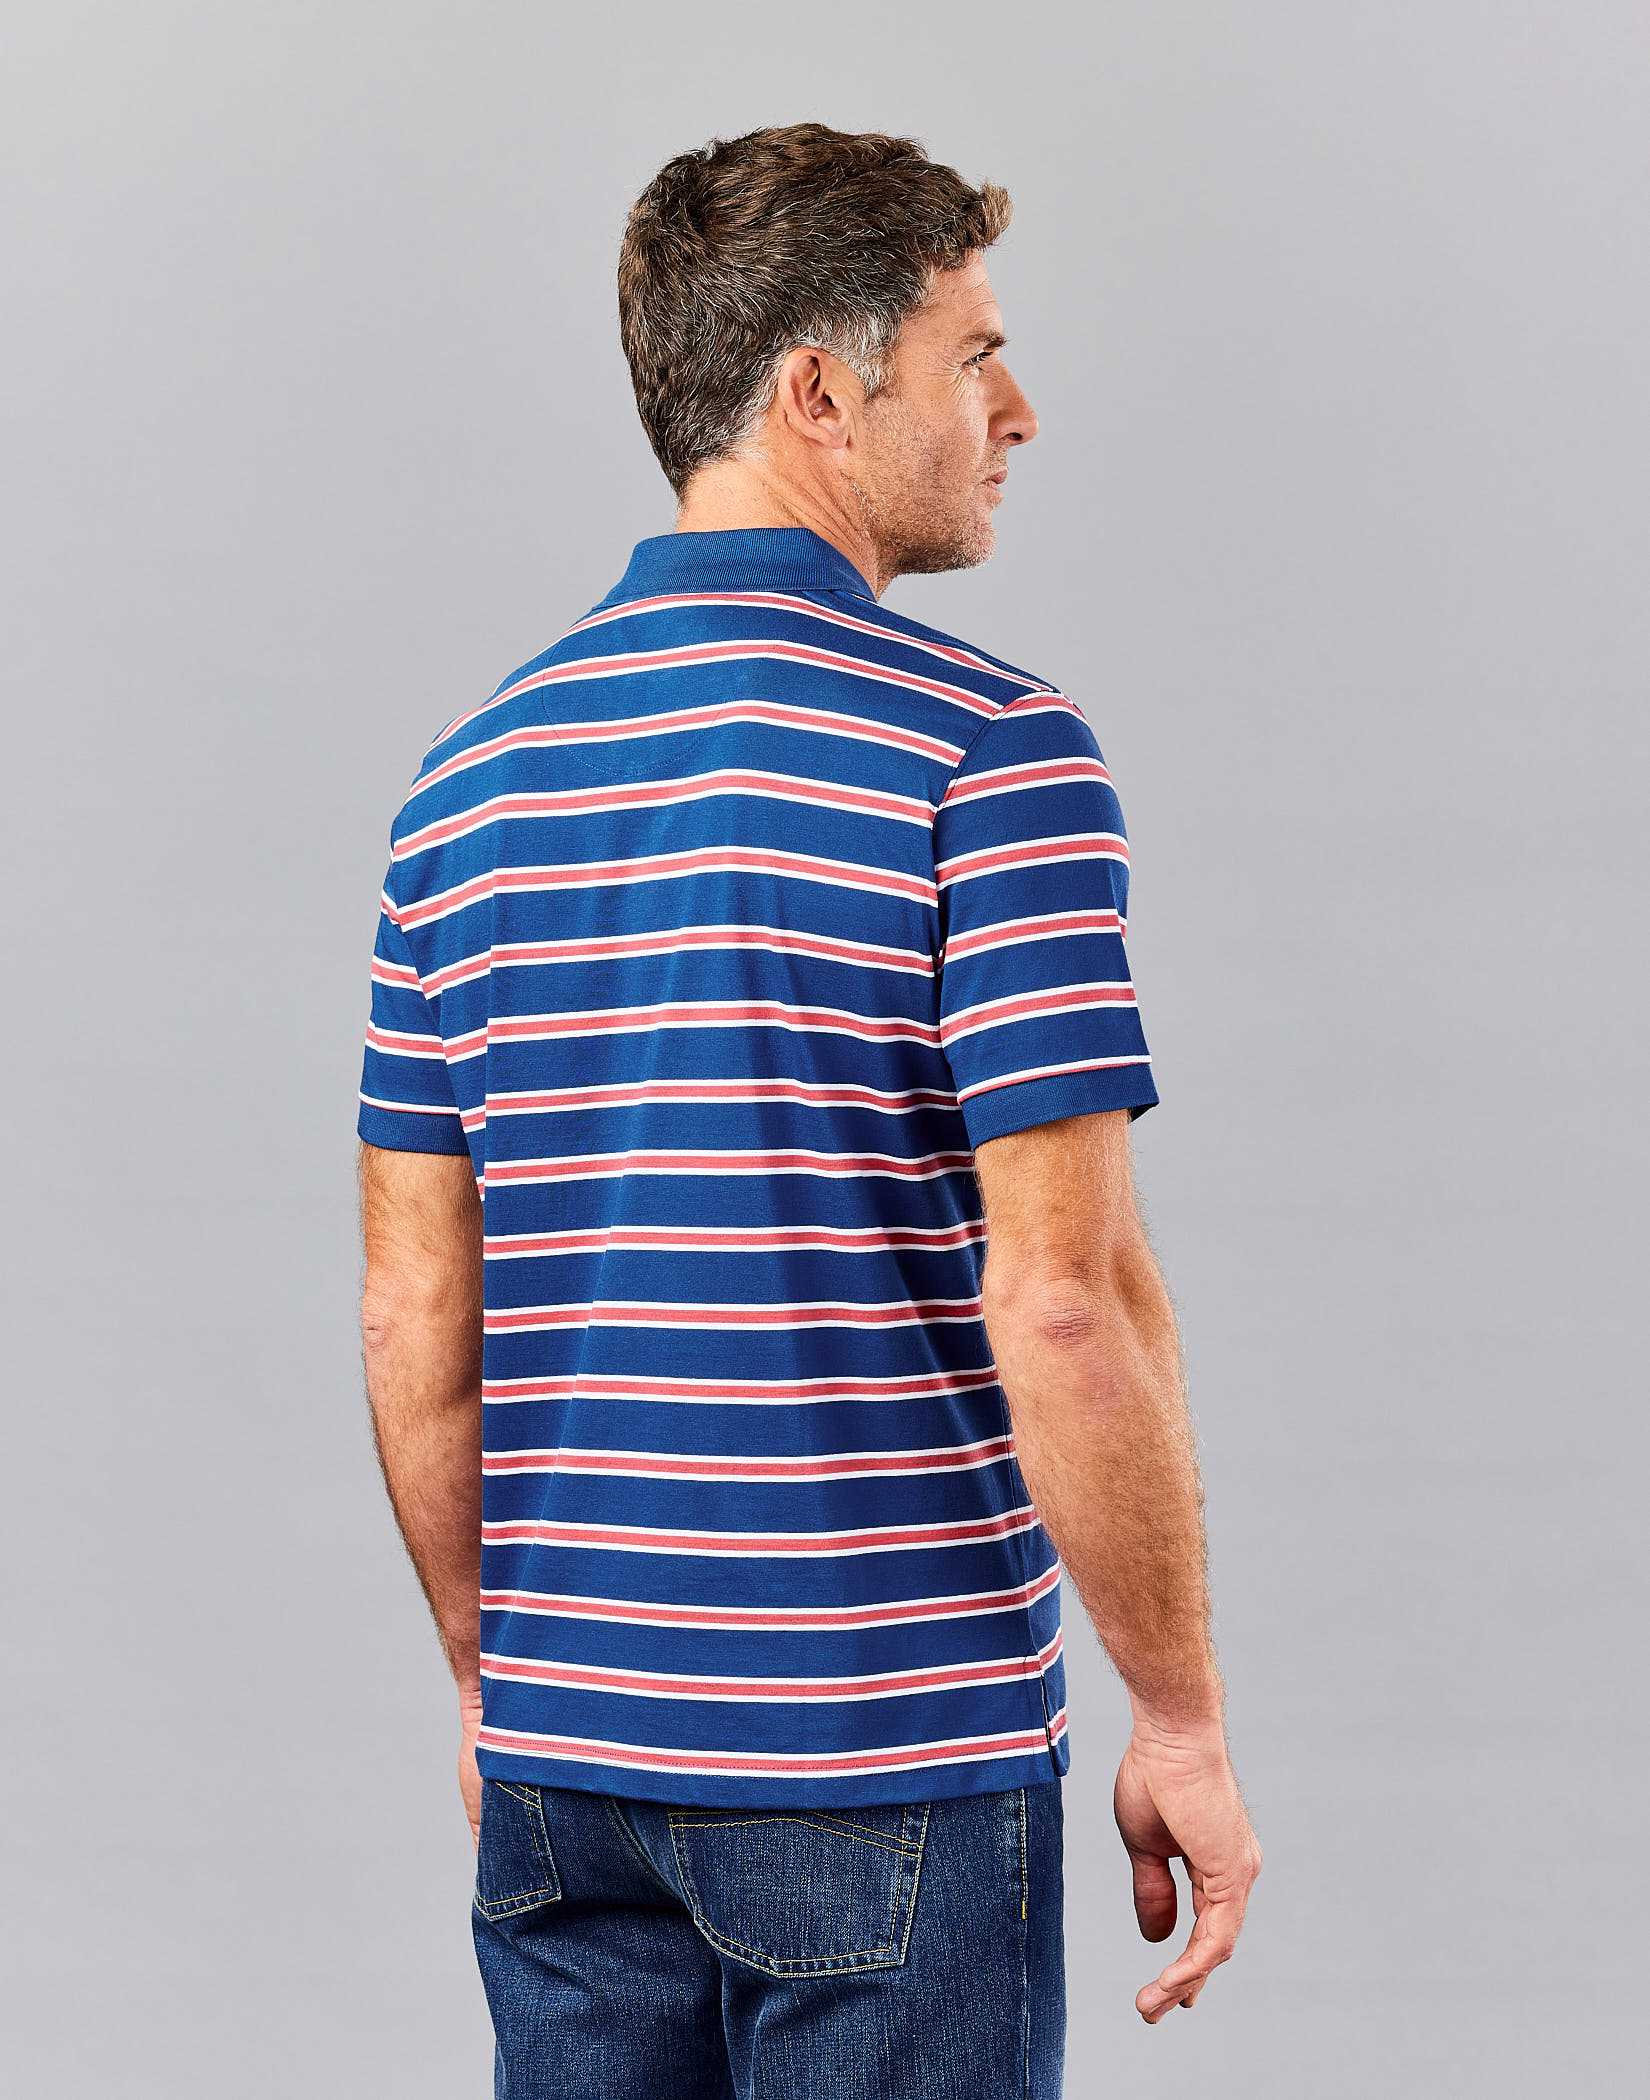 Mens Polo Shirts - Performance, Cotton & Striped Polos